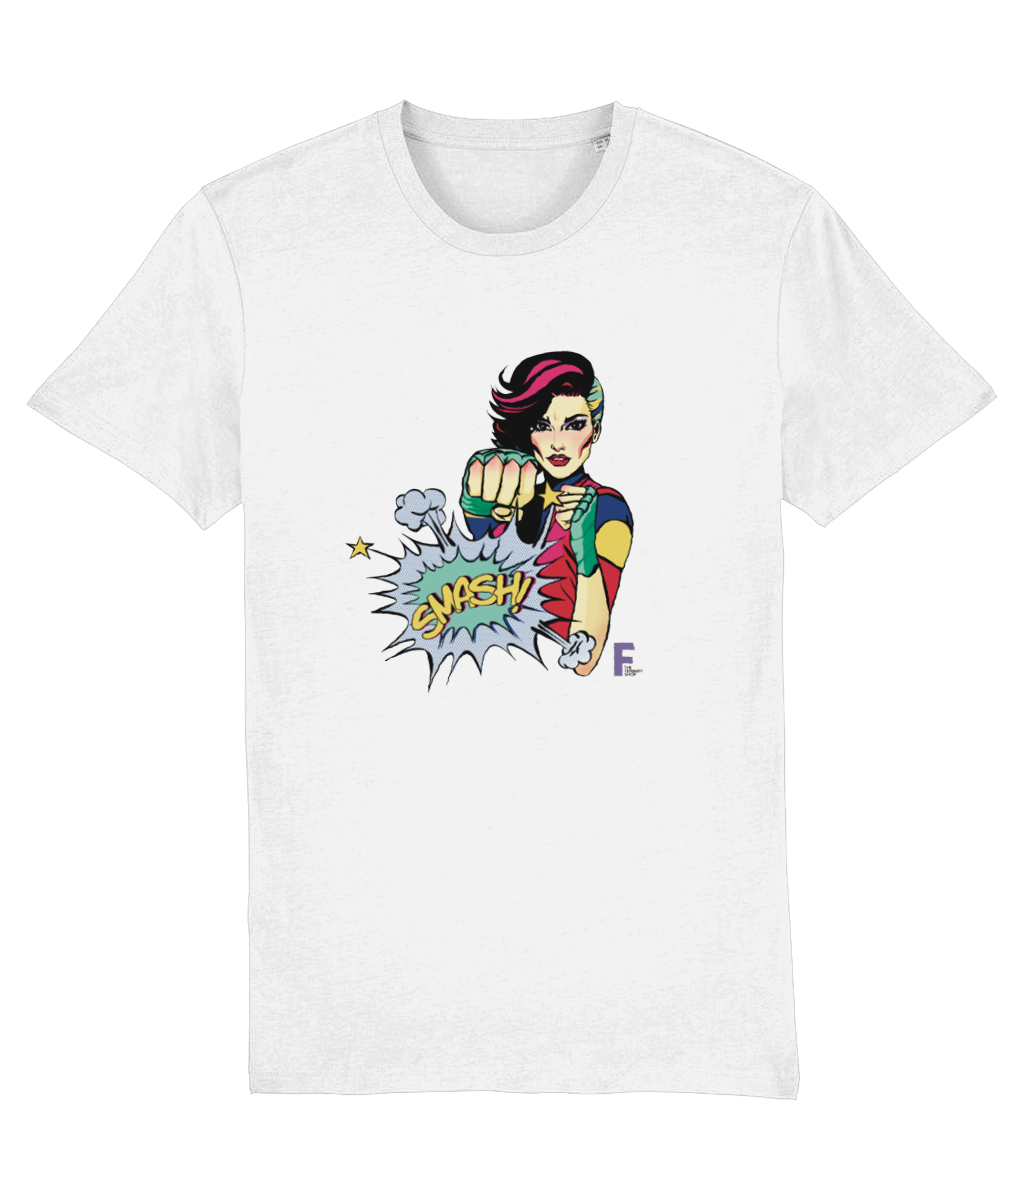 Unisex Organic Feminist T Shirt - Smash it